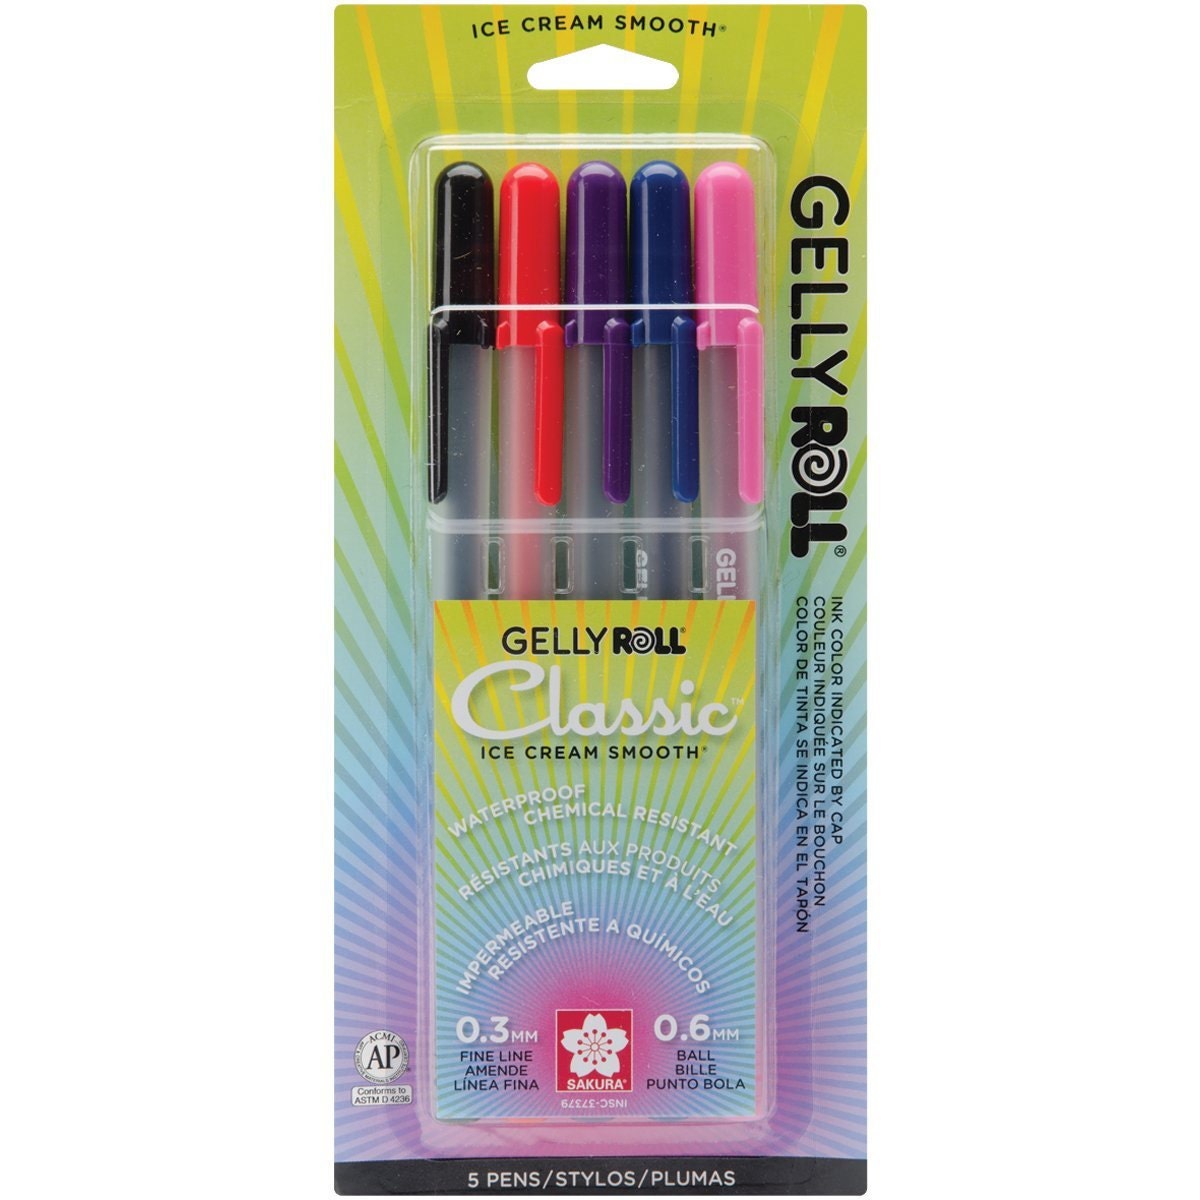 12 Sakura Gelly Roll Pens, Colored, Stardust Galaxy 12 Sakura Bold Point  Gel Ink Pen Set Adult Book Coloring, Bible Studies, Planners 